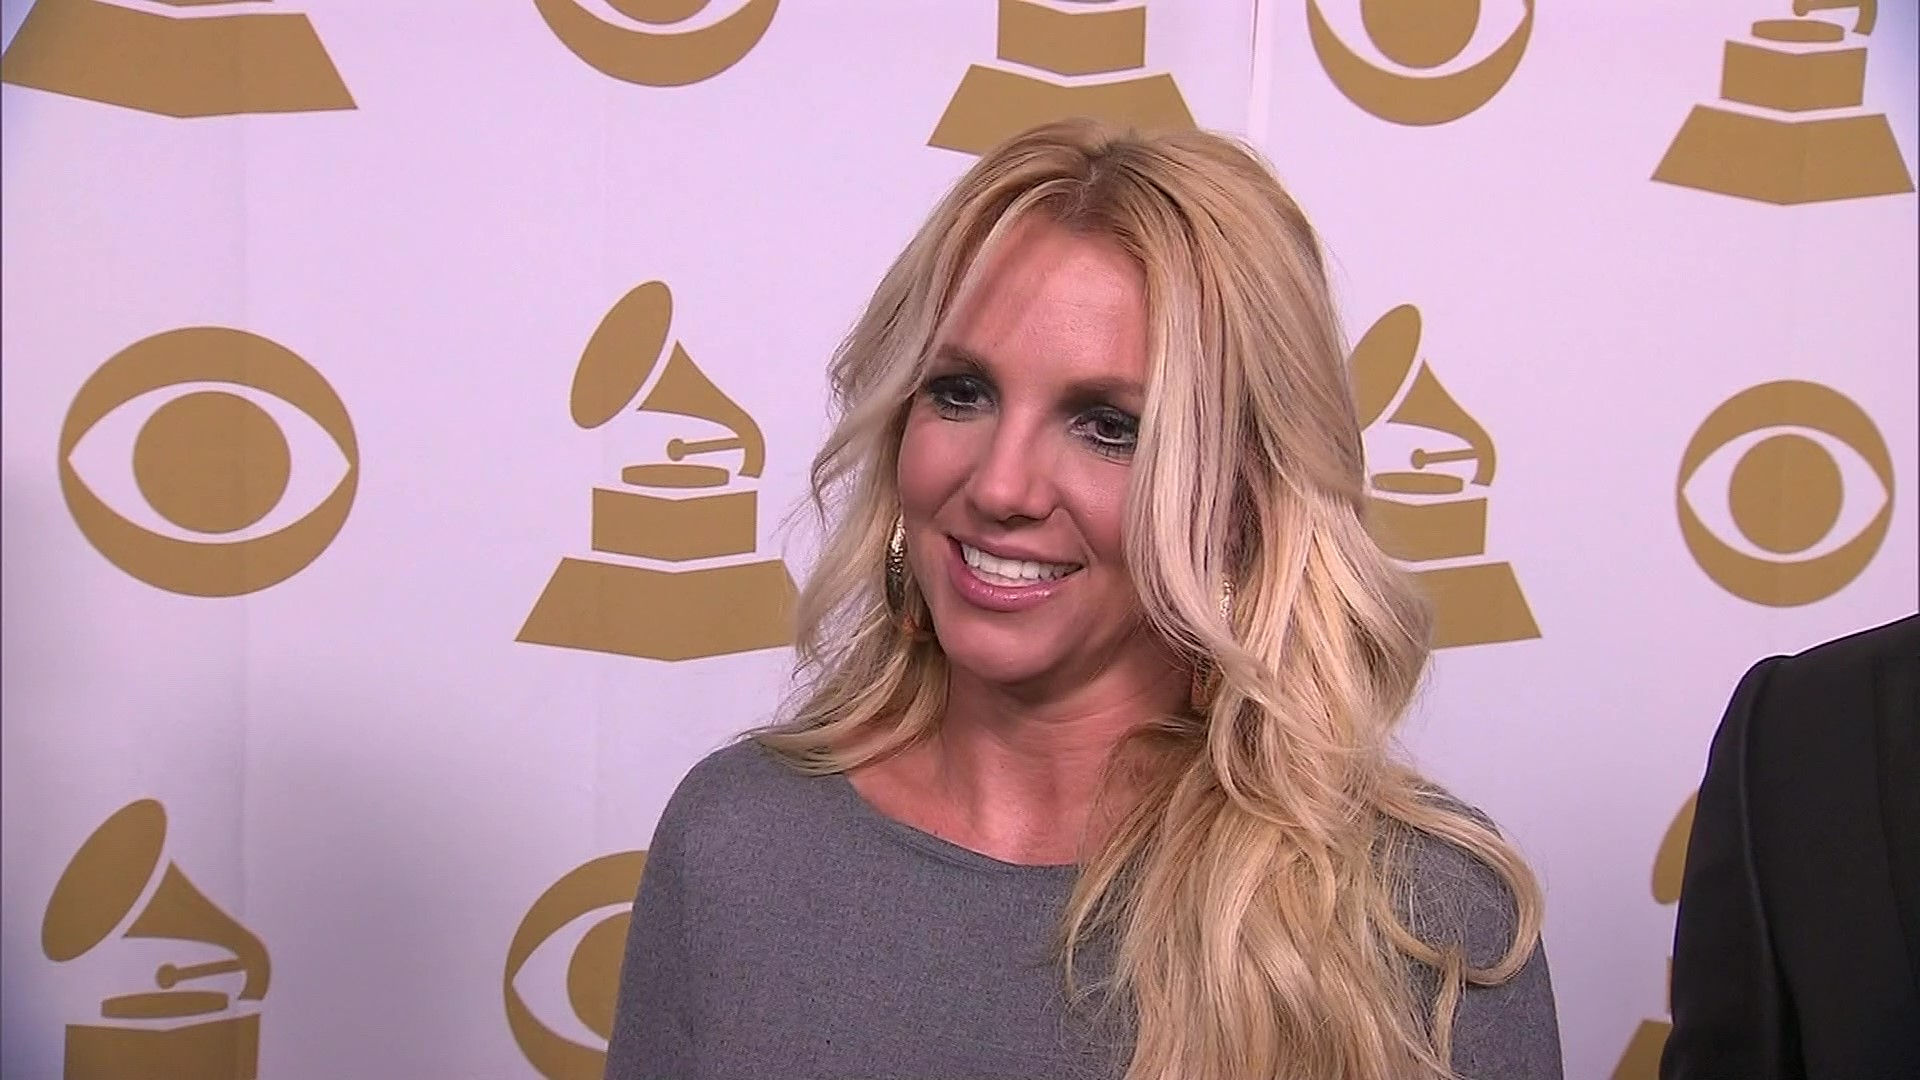 Britney Spears says Federline's interview is 'hurtful' - Los